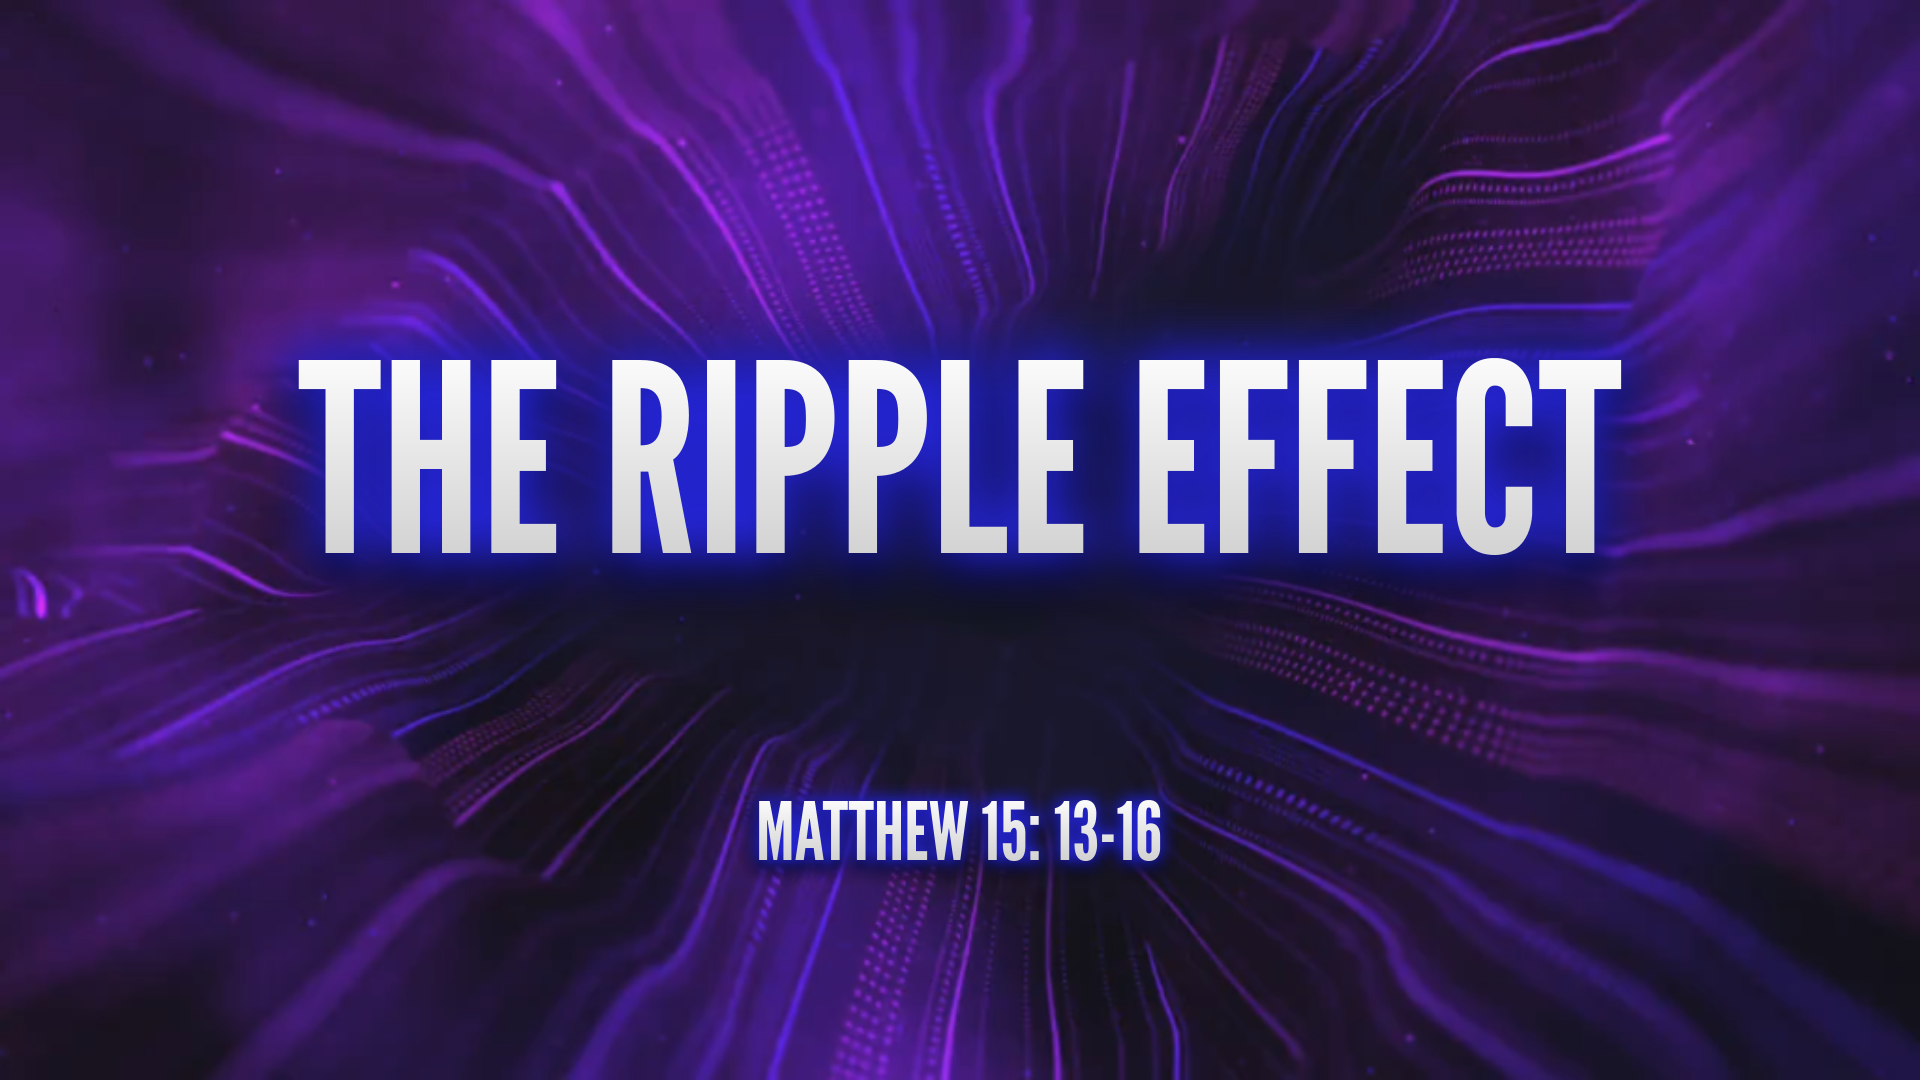 May 15, 2022 - The Ripple Effect (Video) Matthew 15: 13-16